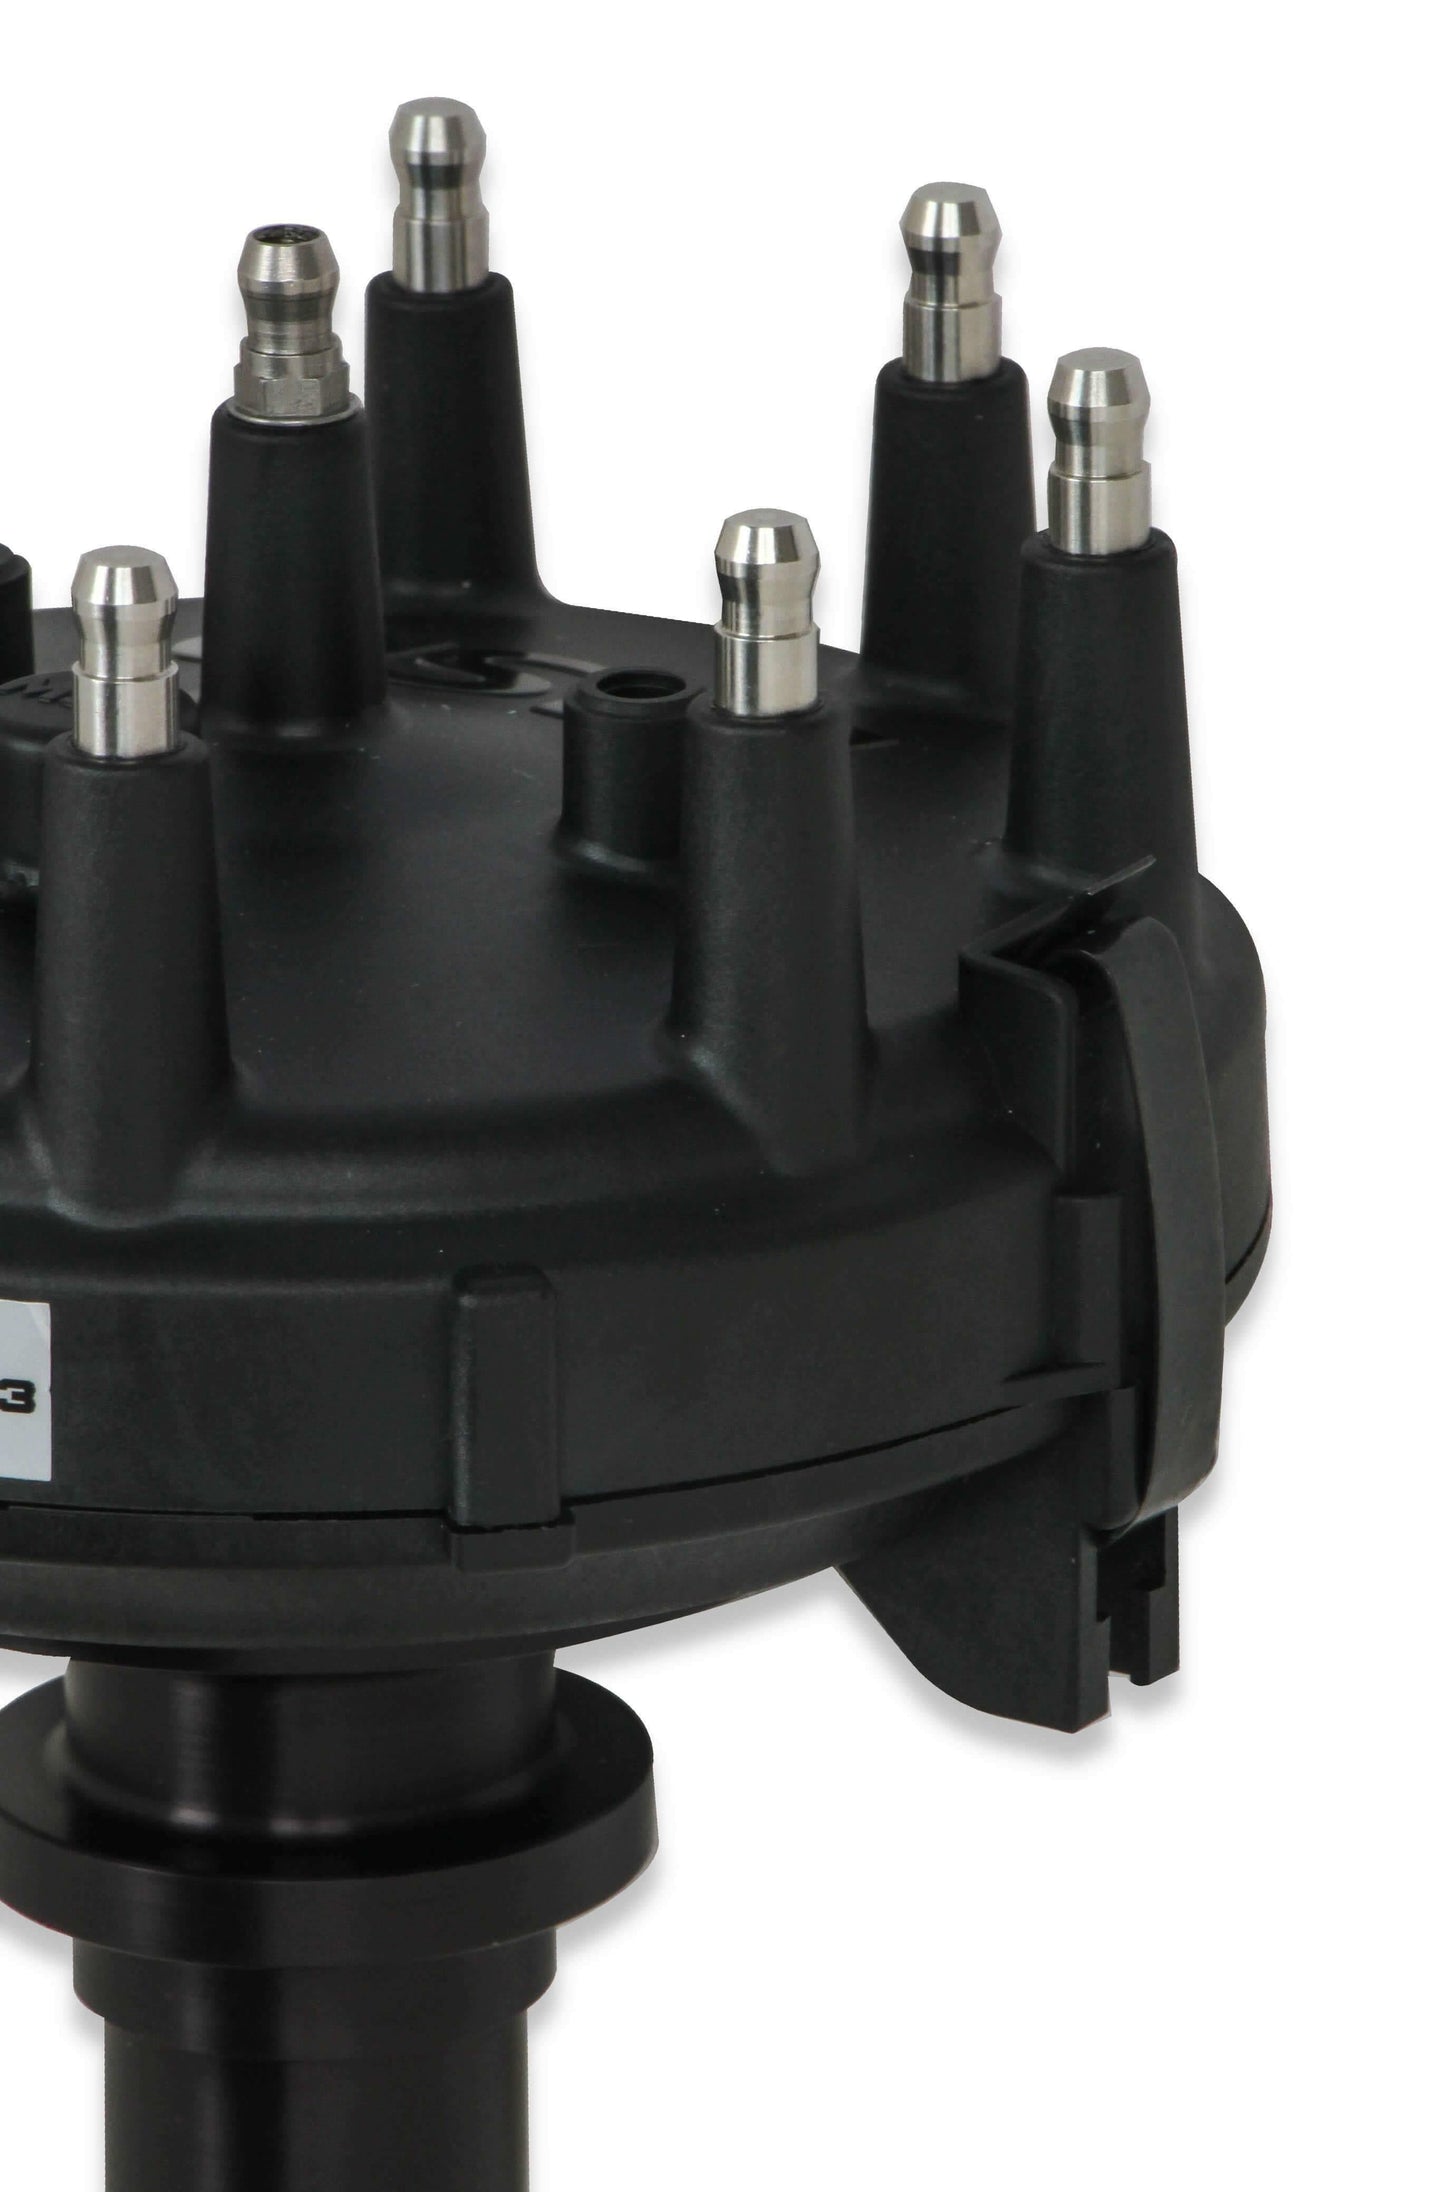 MSD Black Chevy Low-Profile Crank Trigger Distributor - 846973